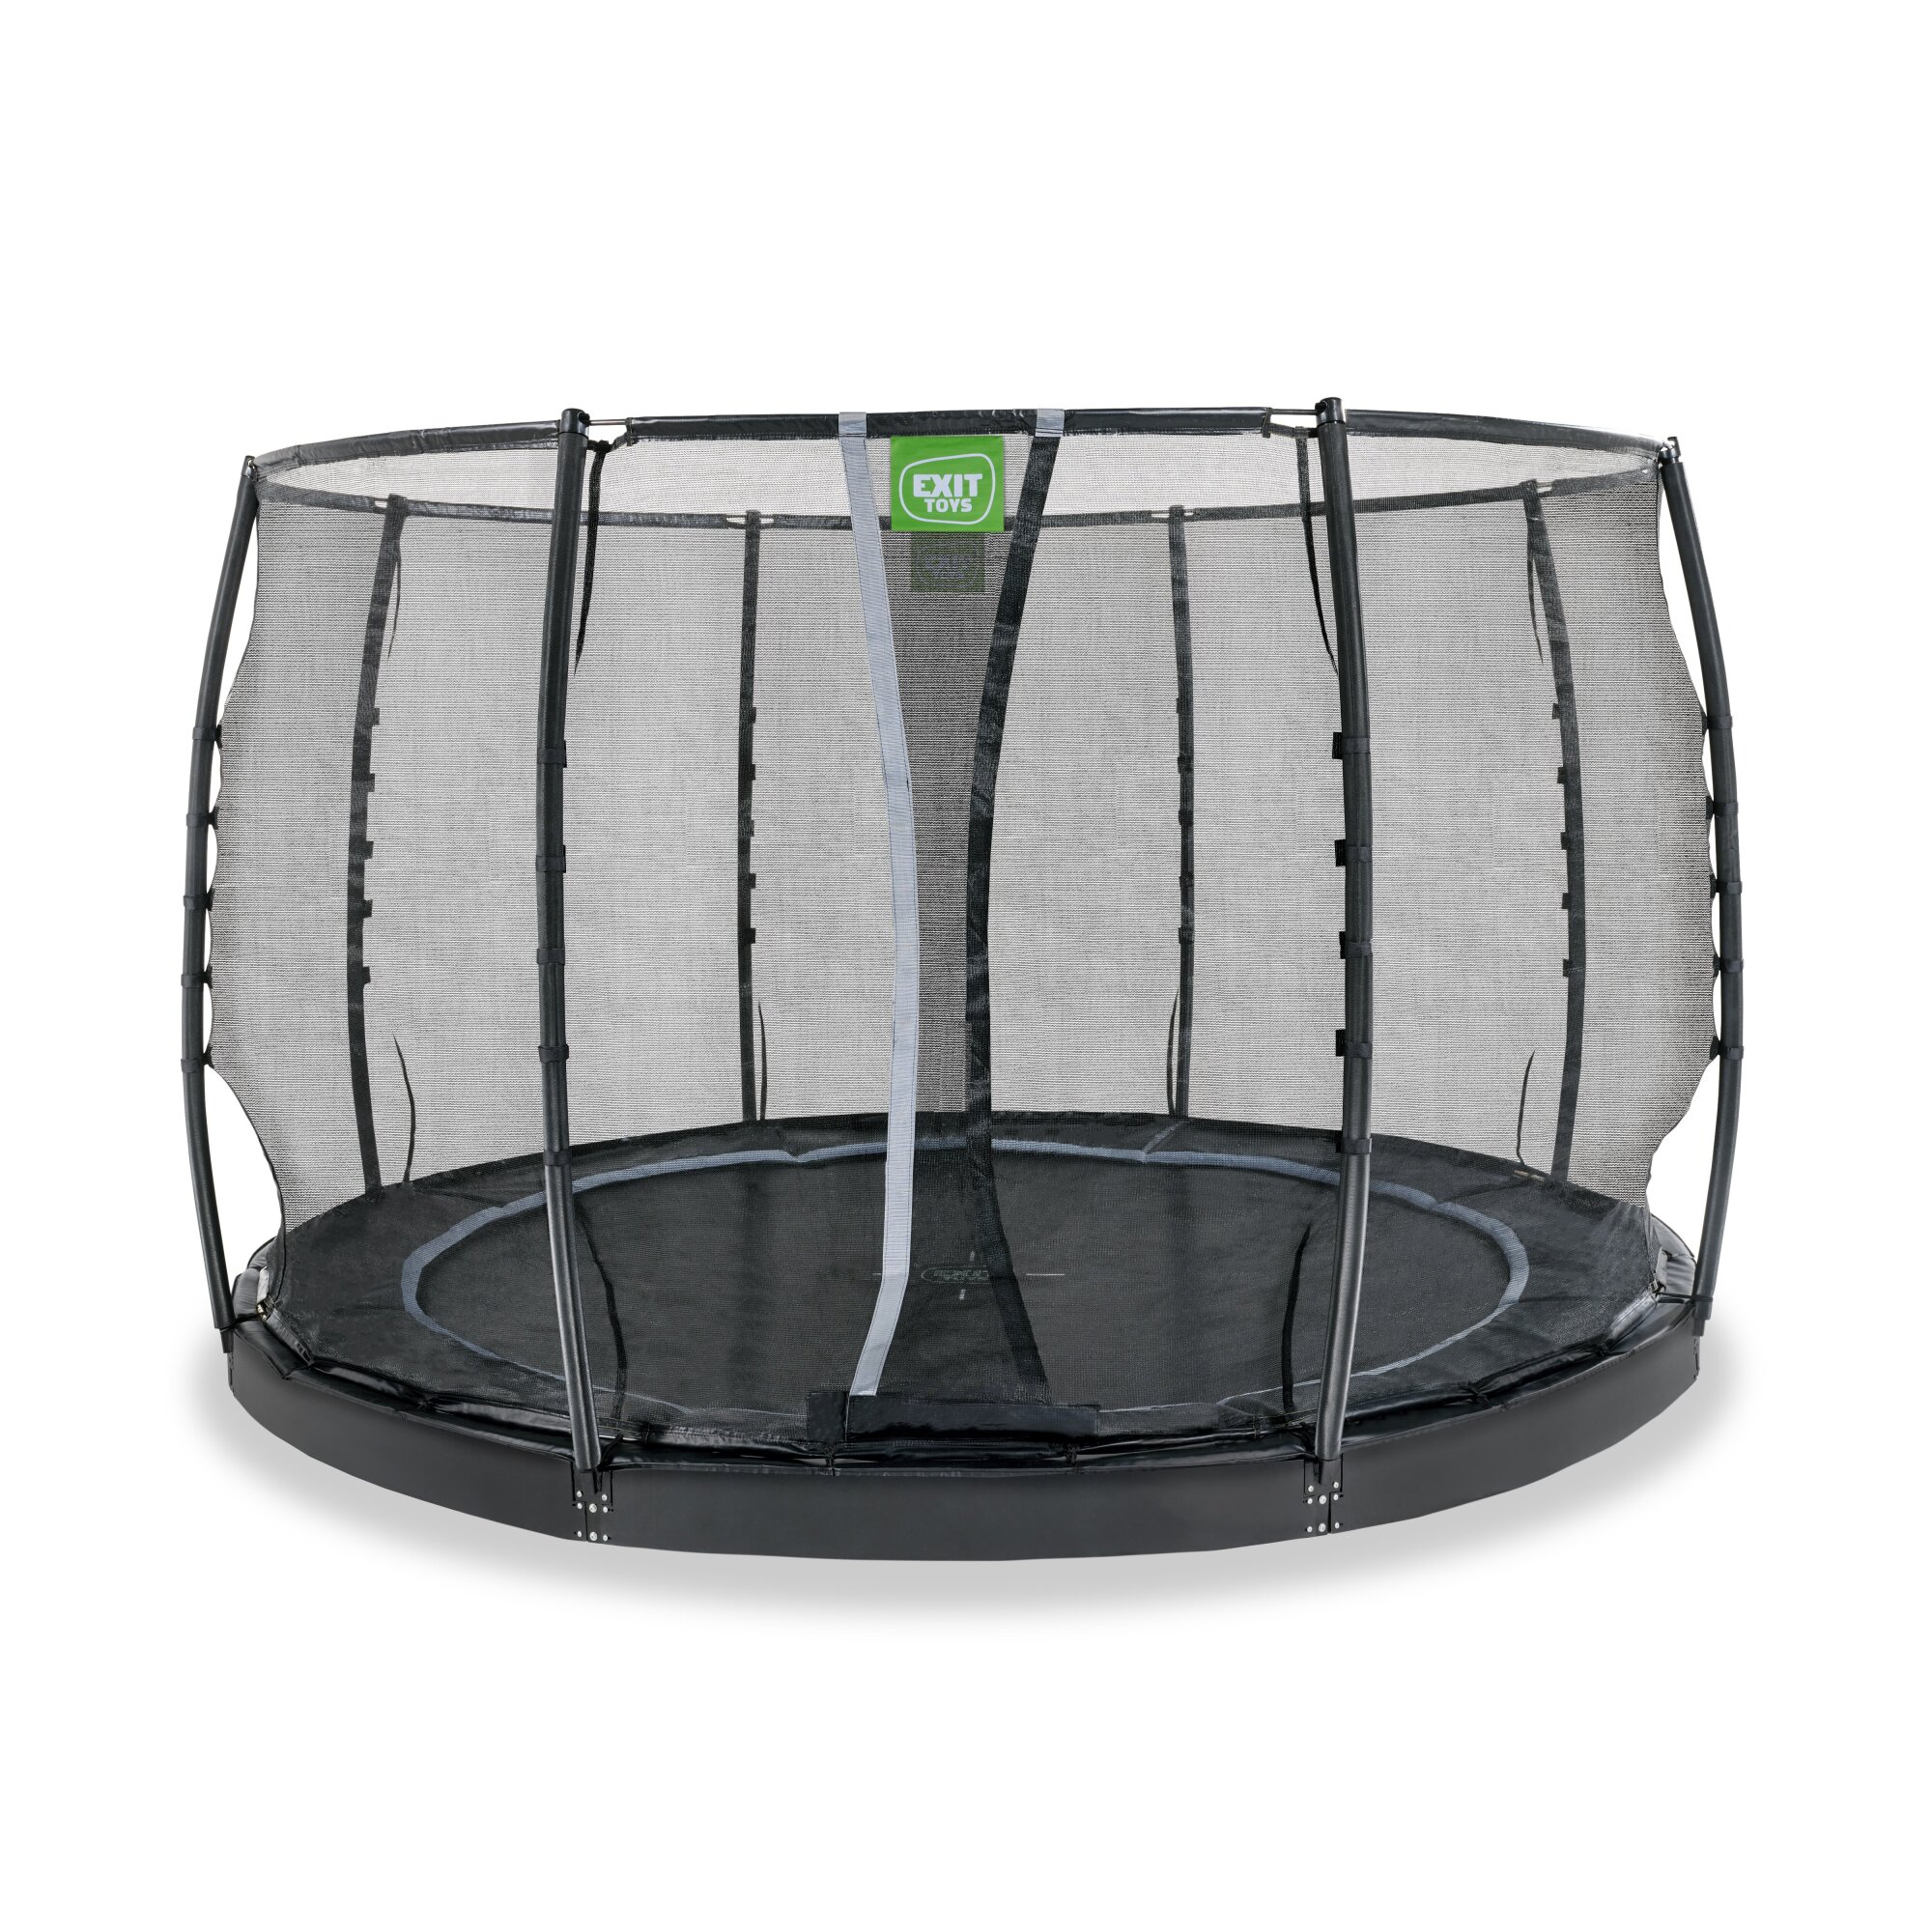 EXIT Dynamic ground level trampoline ø305cm with safety net - black